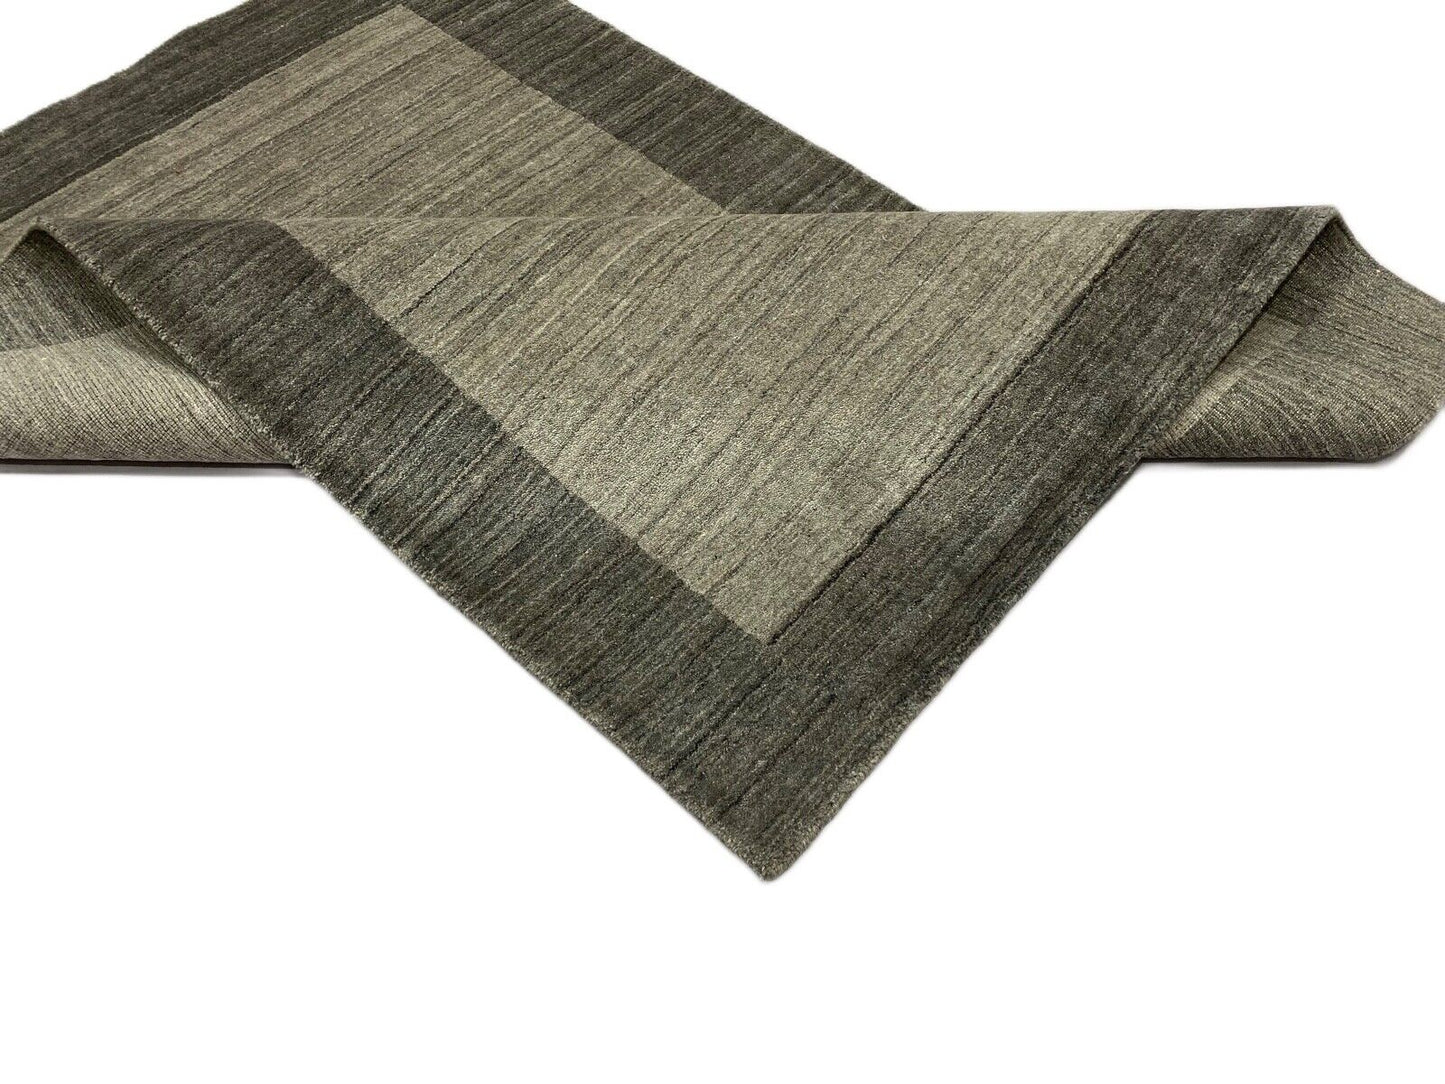 Gabbeh Teppich Wolle Grau lori Handgewebt 120x180 cm Viskose Debbich S9